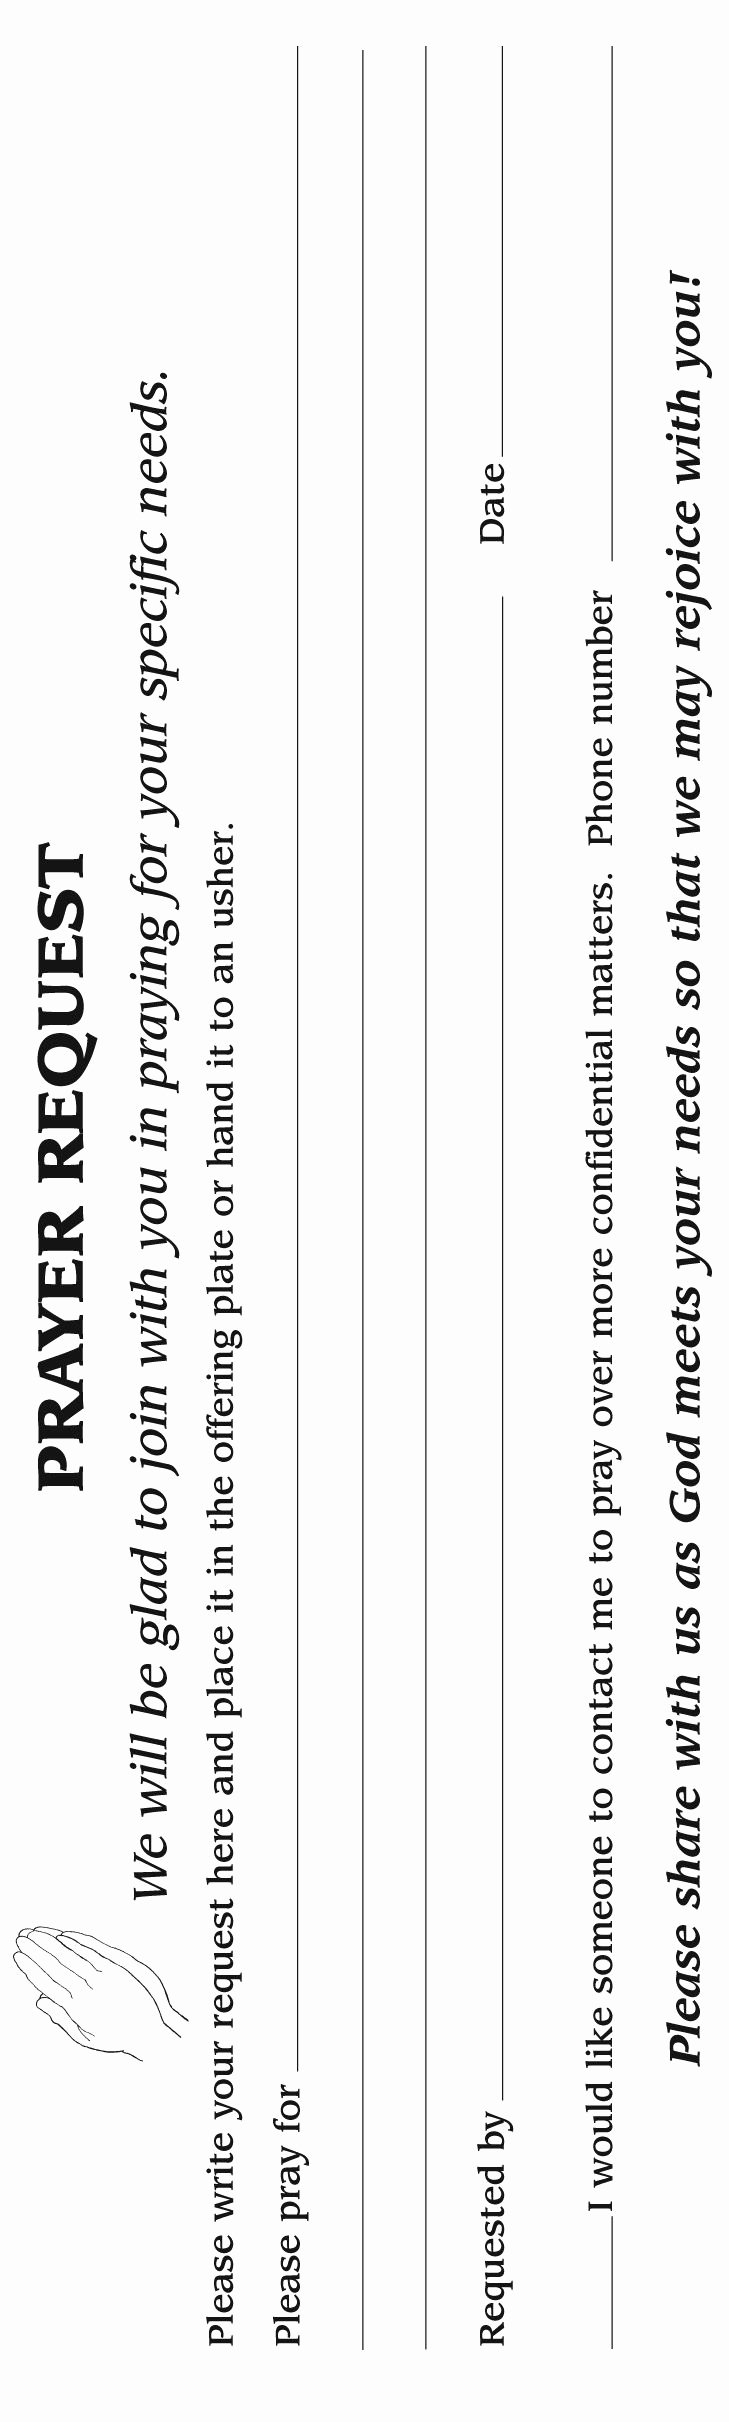 Free Prayer Request form Template Unique Free Printable Prayer Request